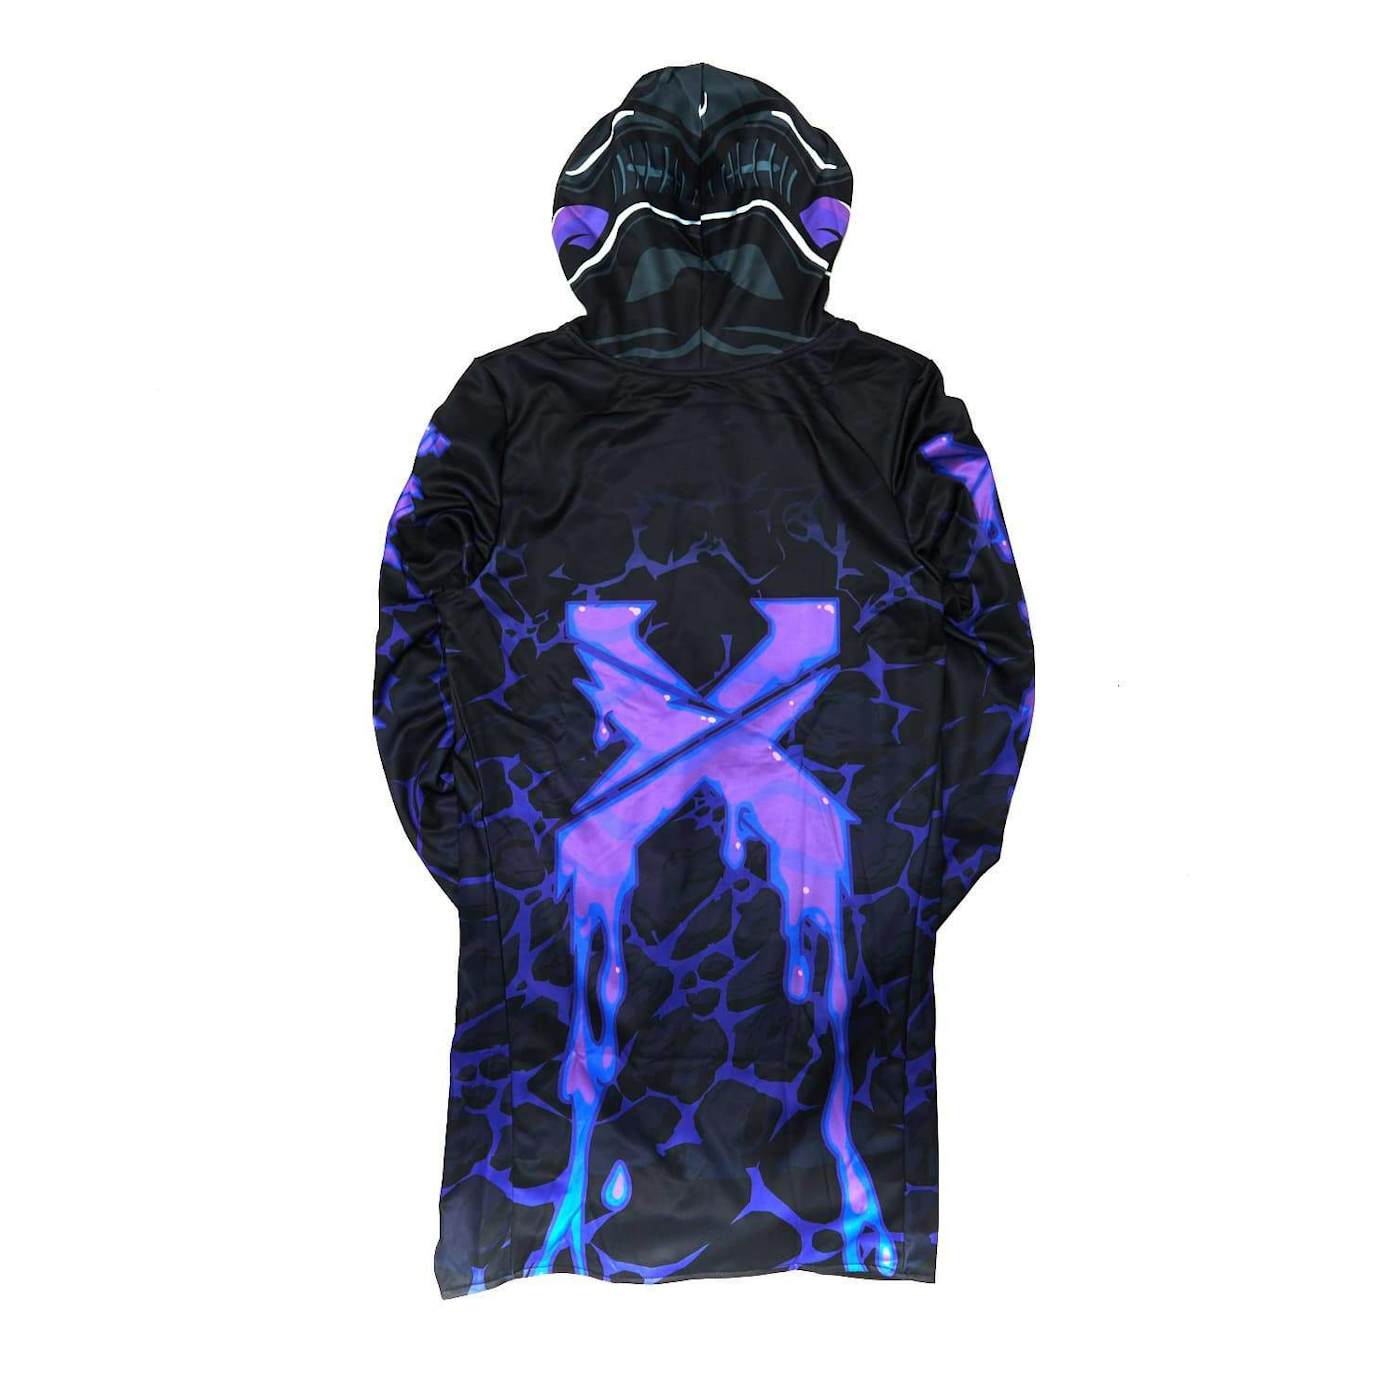 Excision x Scummy Bears Dye Sub Cloak - Purple